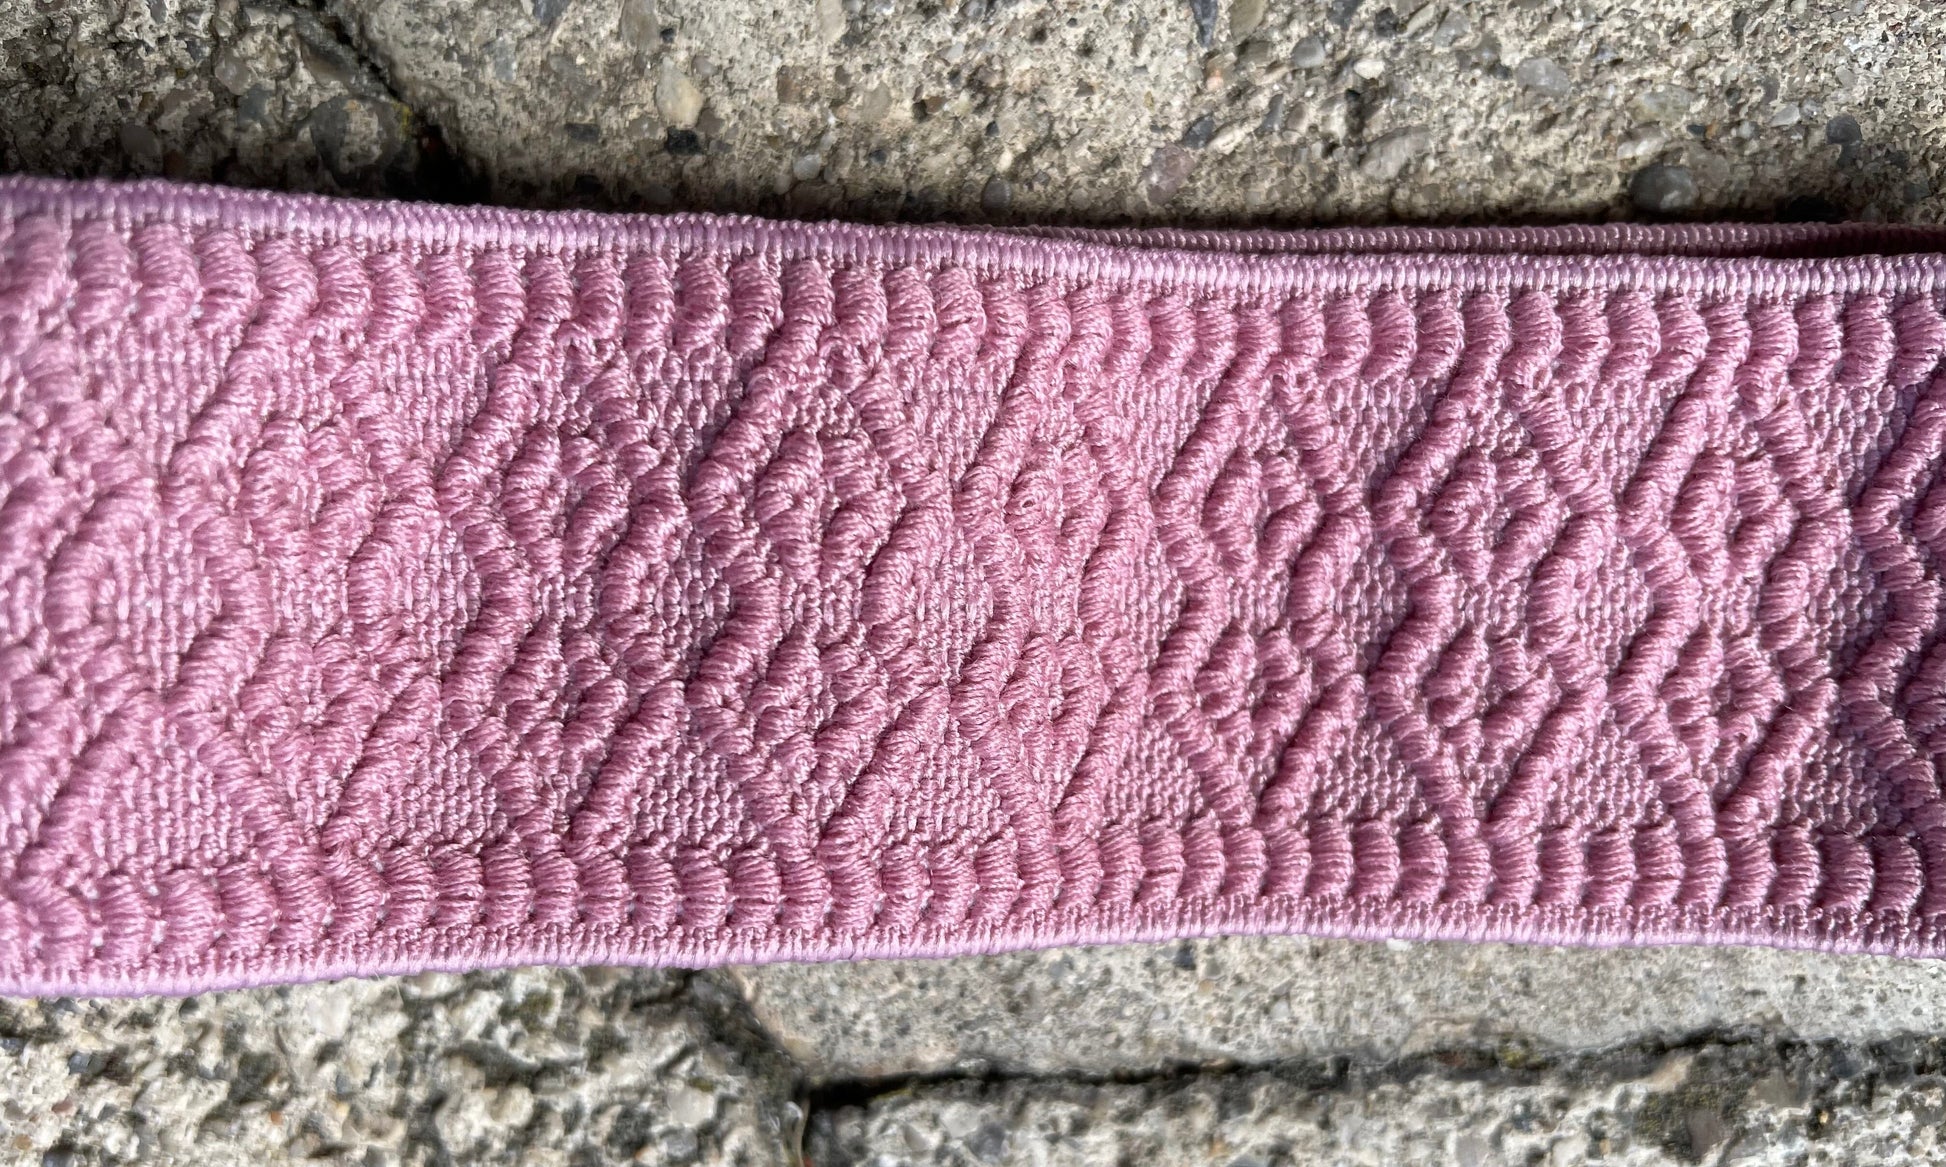 Trachten Stretch Gürtel, rosa silber, 4 cm Gürtel Eigenmarke 